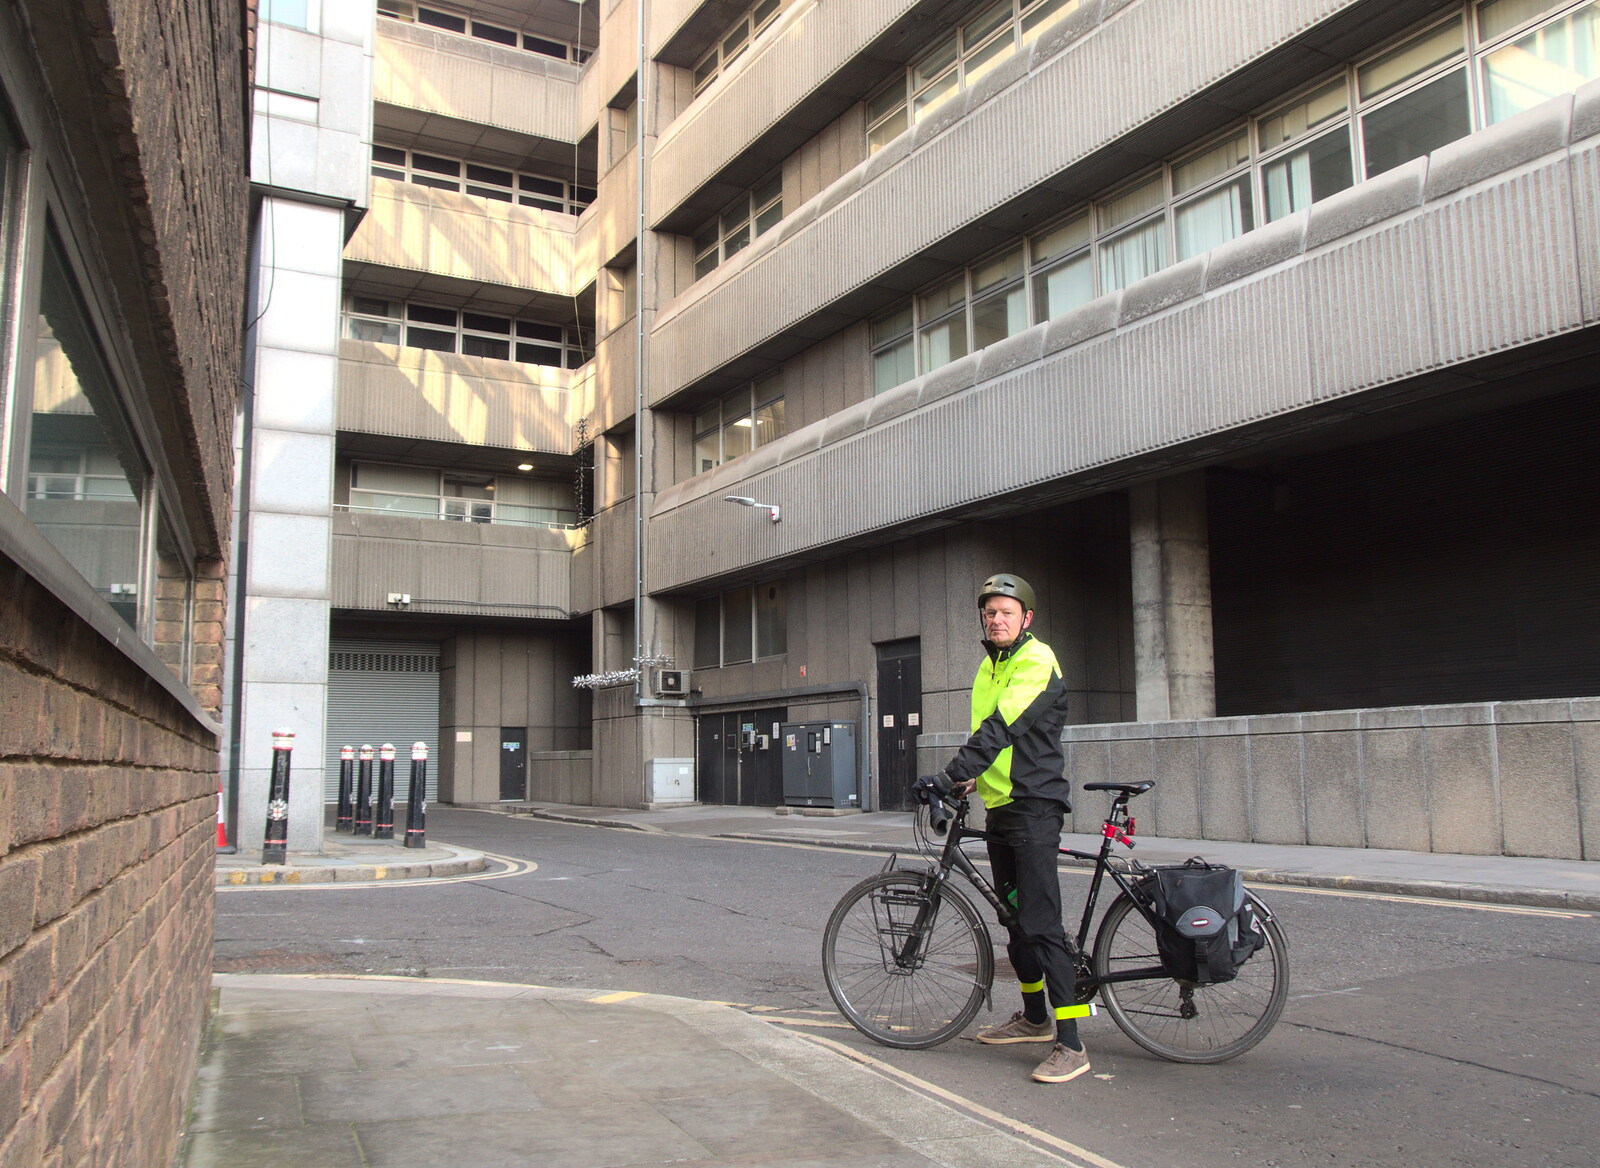 Nosher on the bike on Castle Baynard Street from The Last Trip to the SwiftKey Office, Paddington, London - 23rd February 2022